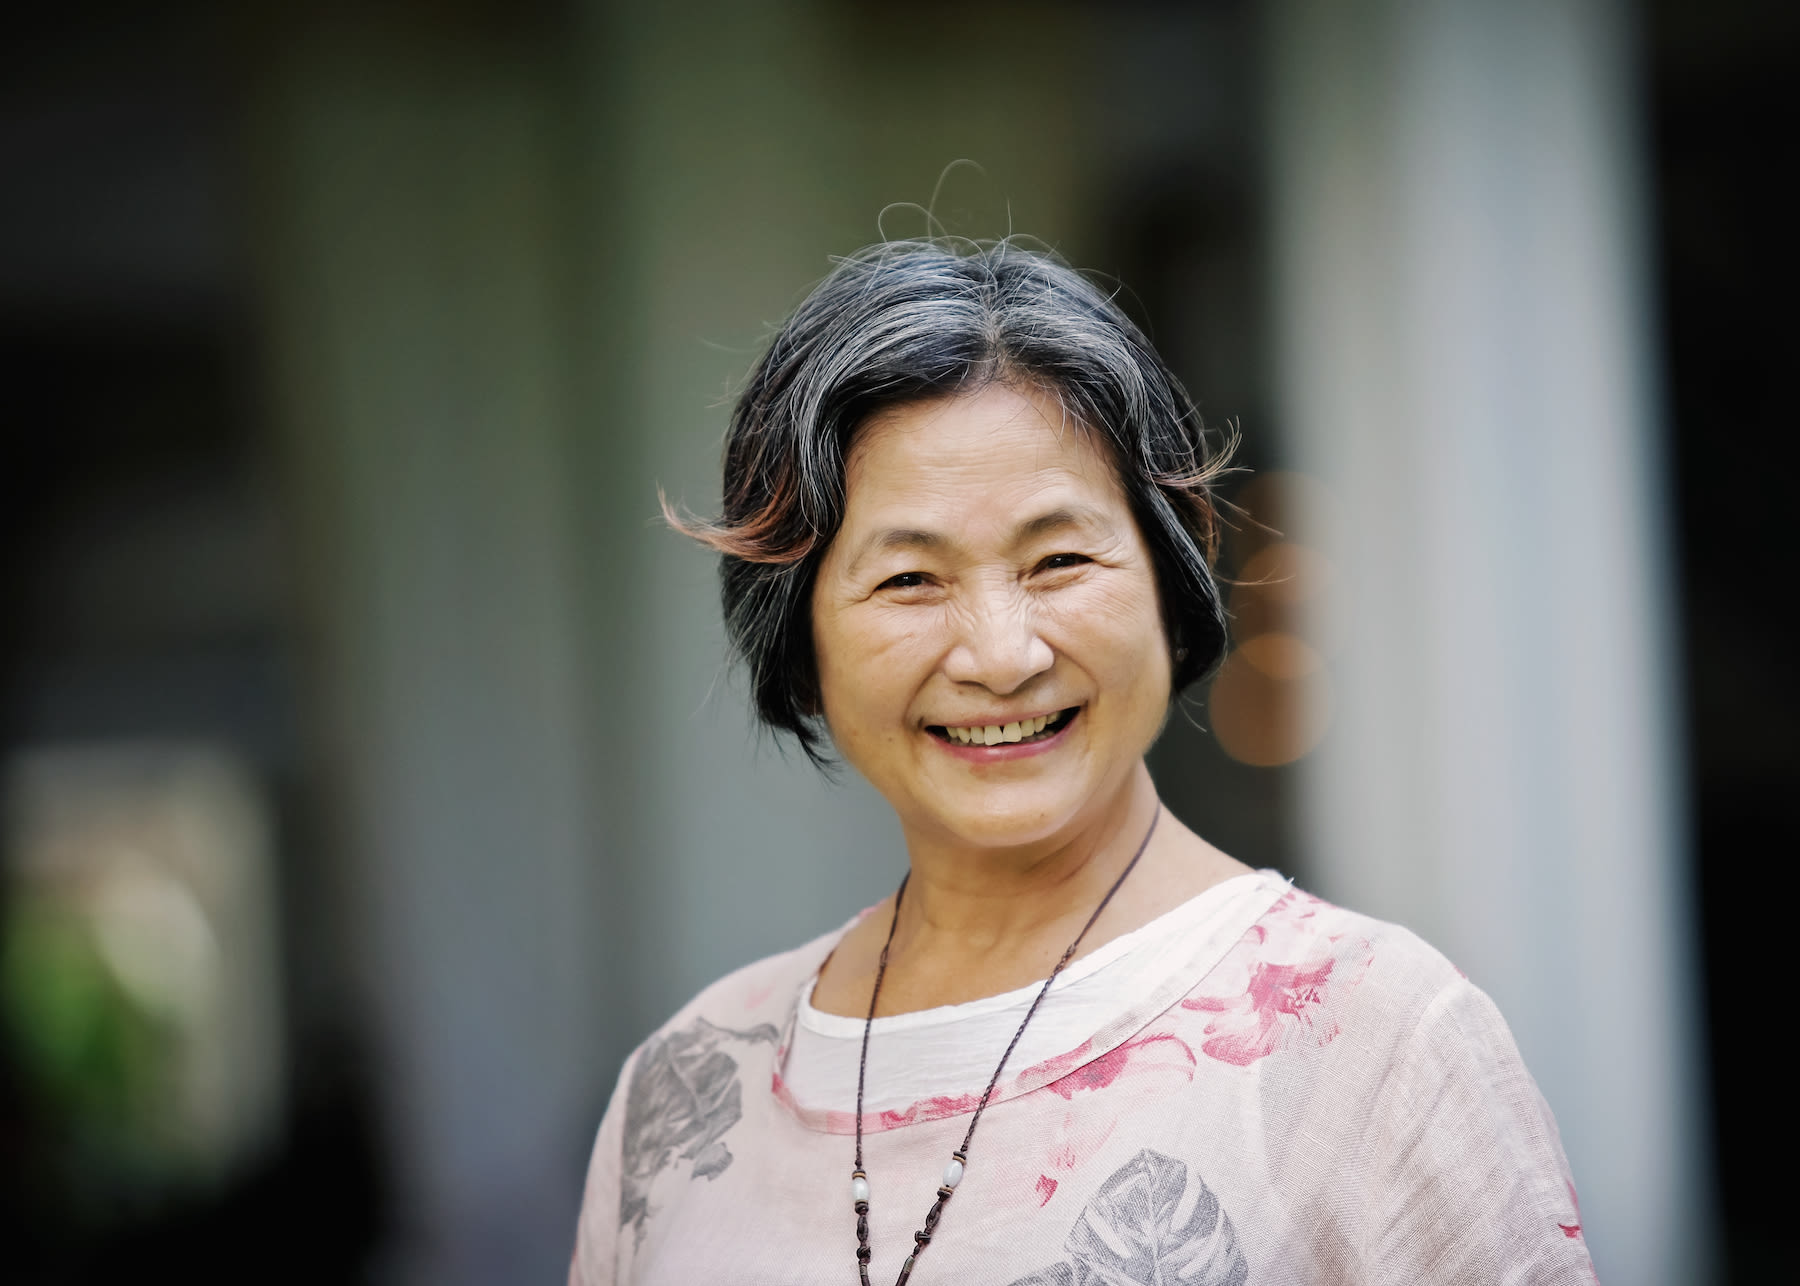 Cheng Pei Pei, ‘Crouching Tiger, Hidden Dragon’ Actress, Dead at 78